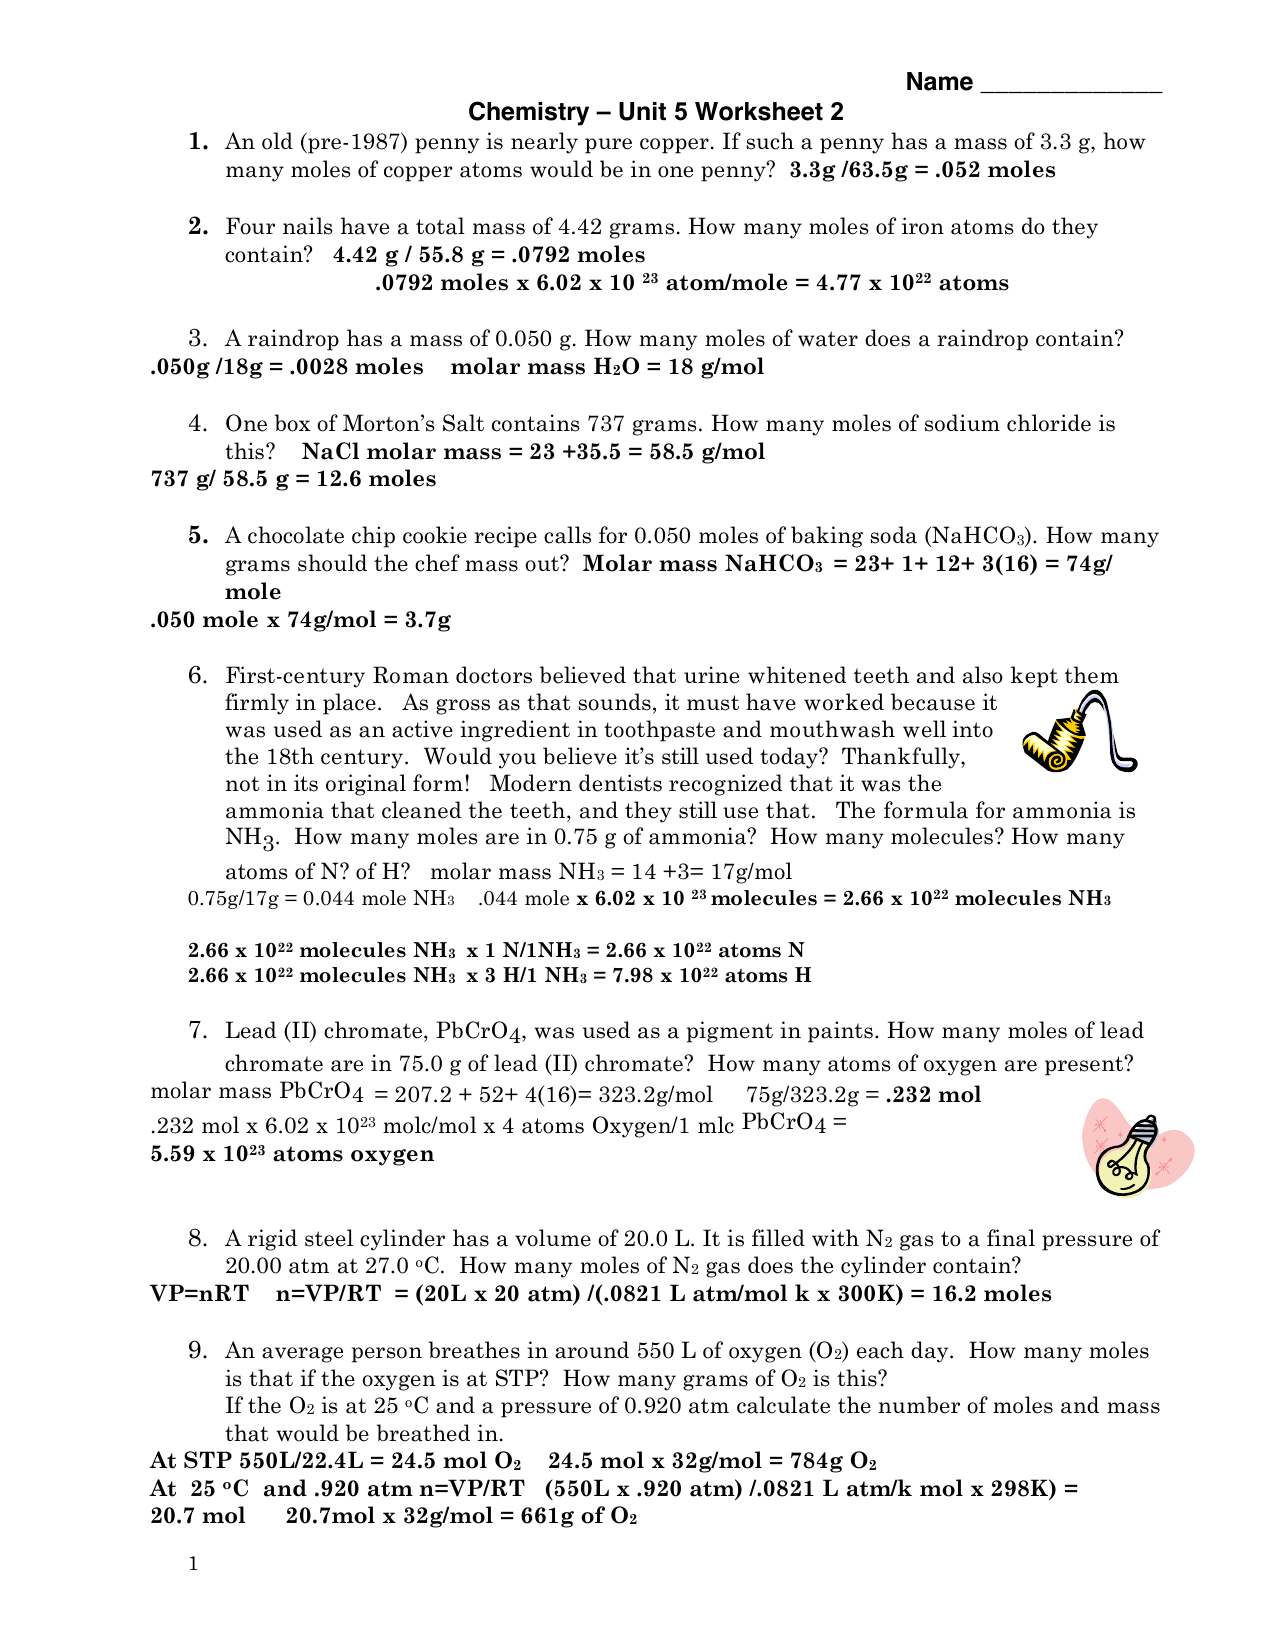 Chemistry Unit 6 Worksheet 6 Answer Key Villardigital Library For